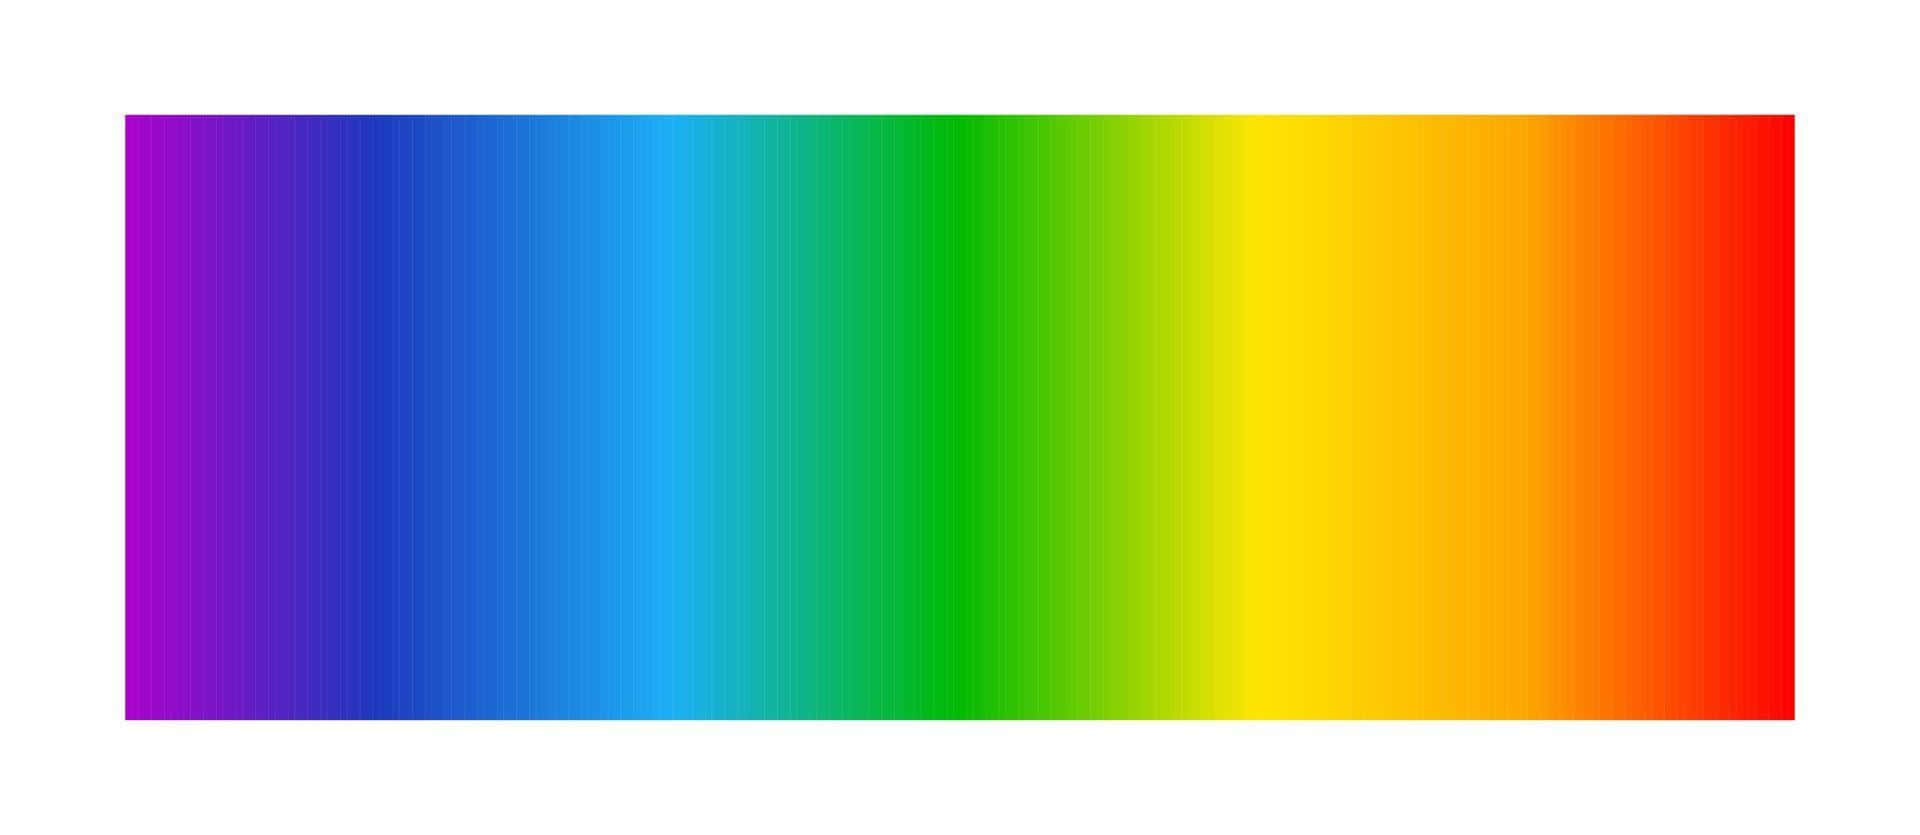 Vibrant Colors of the Spectrum